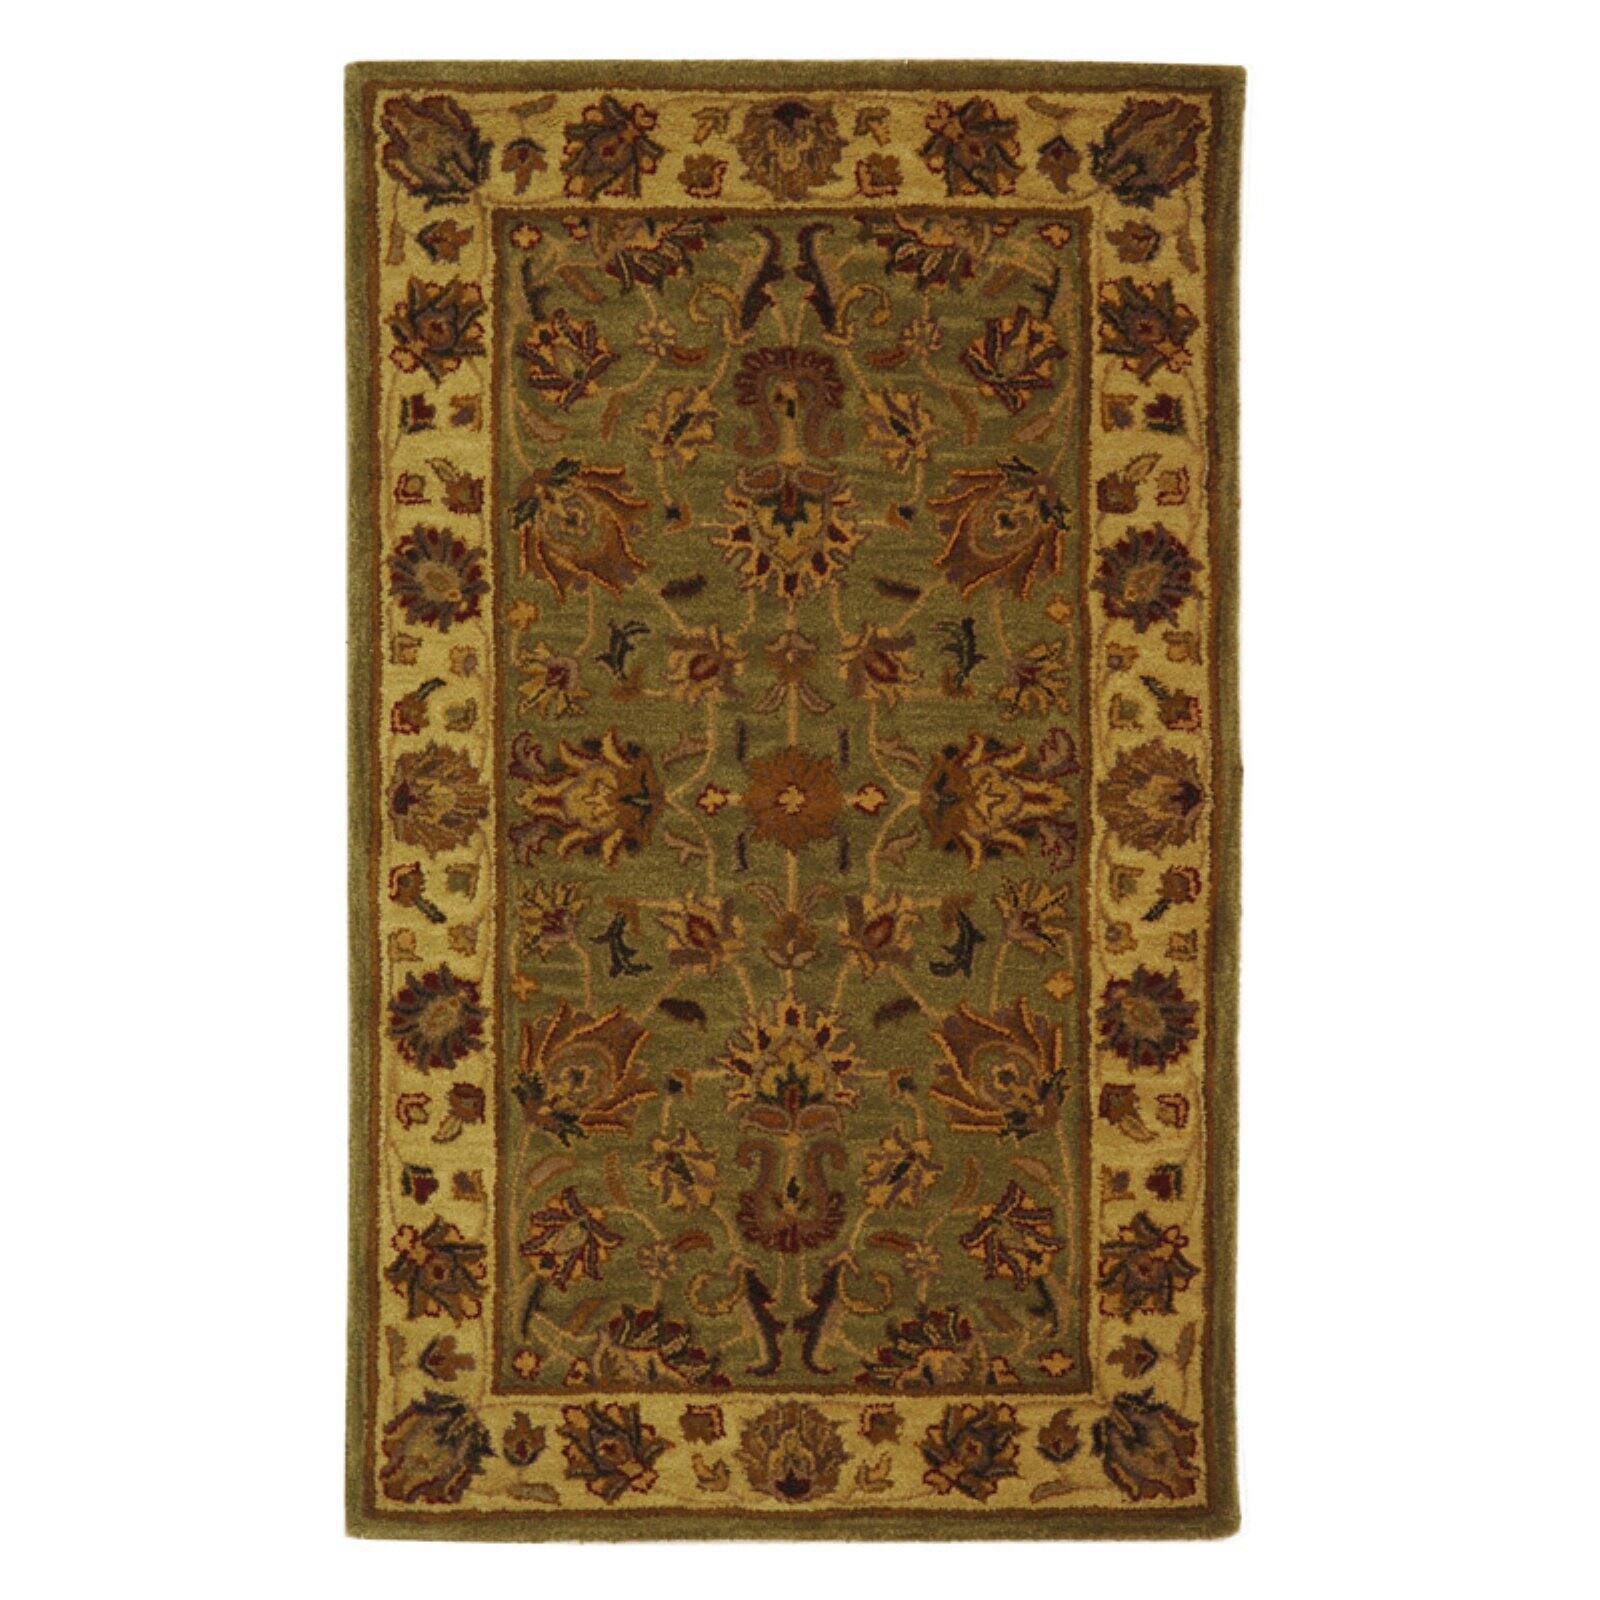 SAFAVIEH Heritage Regis Traditional Wool Area Rug, Green/Gold, 7'6" x 9'6" - image 4 of 10